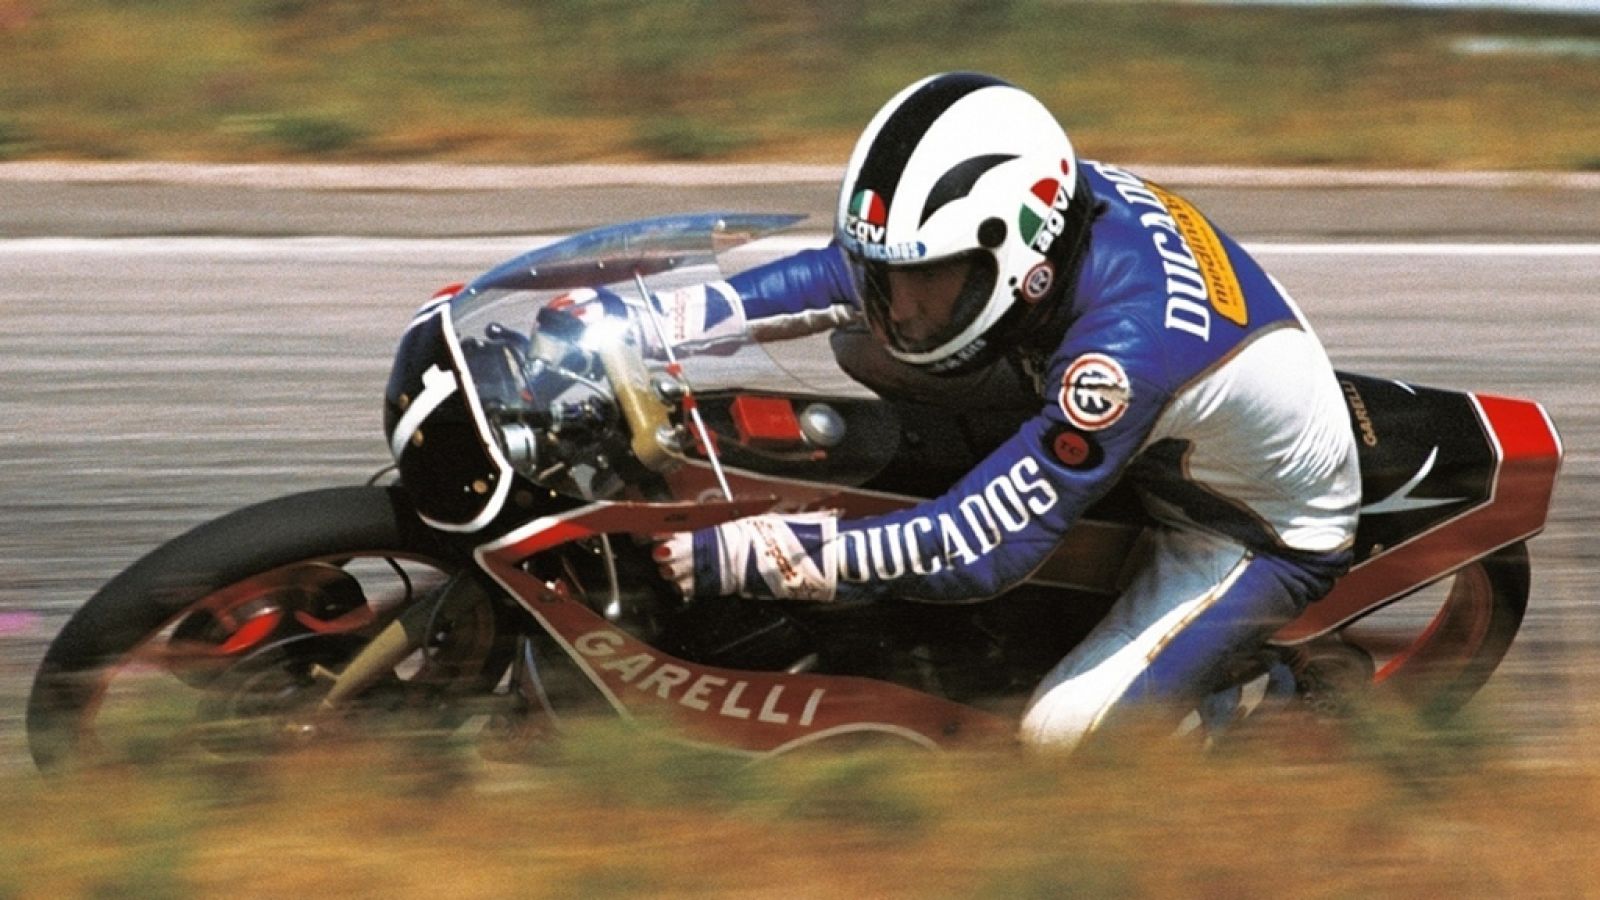 Motociclismo - Gran Premio de Gran Bretaña: Circuito Silverstone. 125cc - 05/08/1984 - Ver ahora